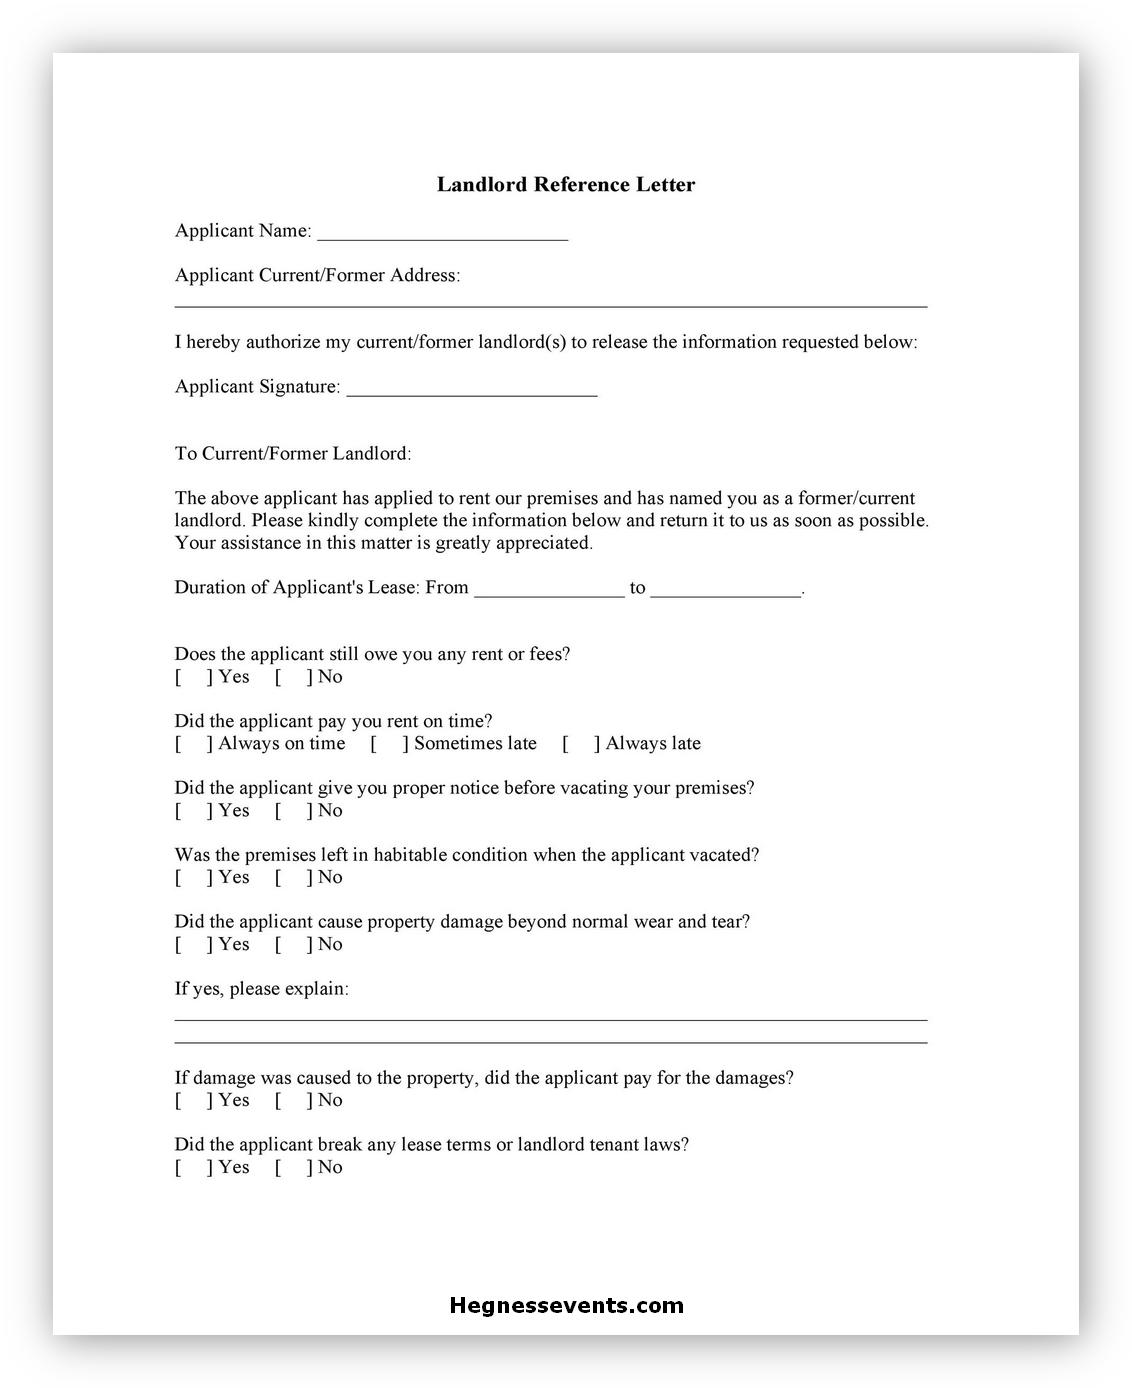 Landlord Reference Letter 05